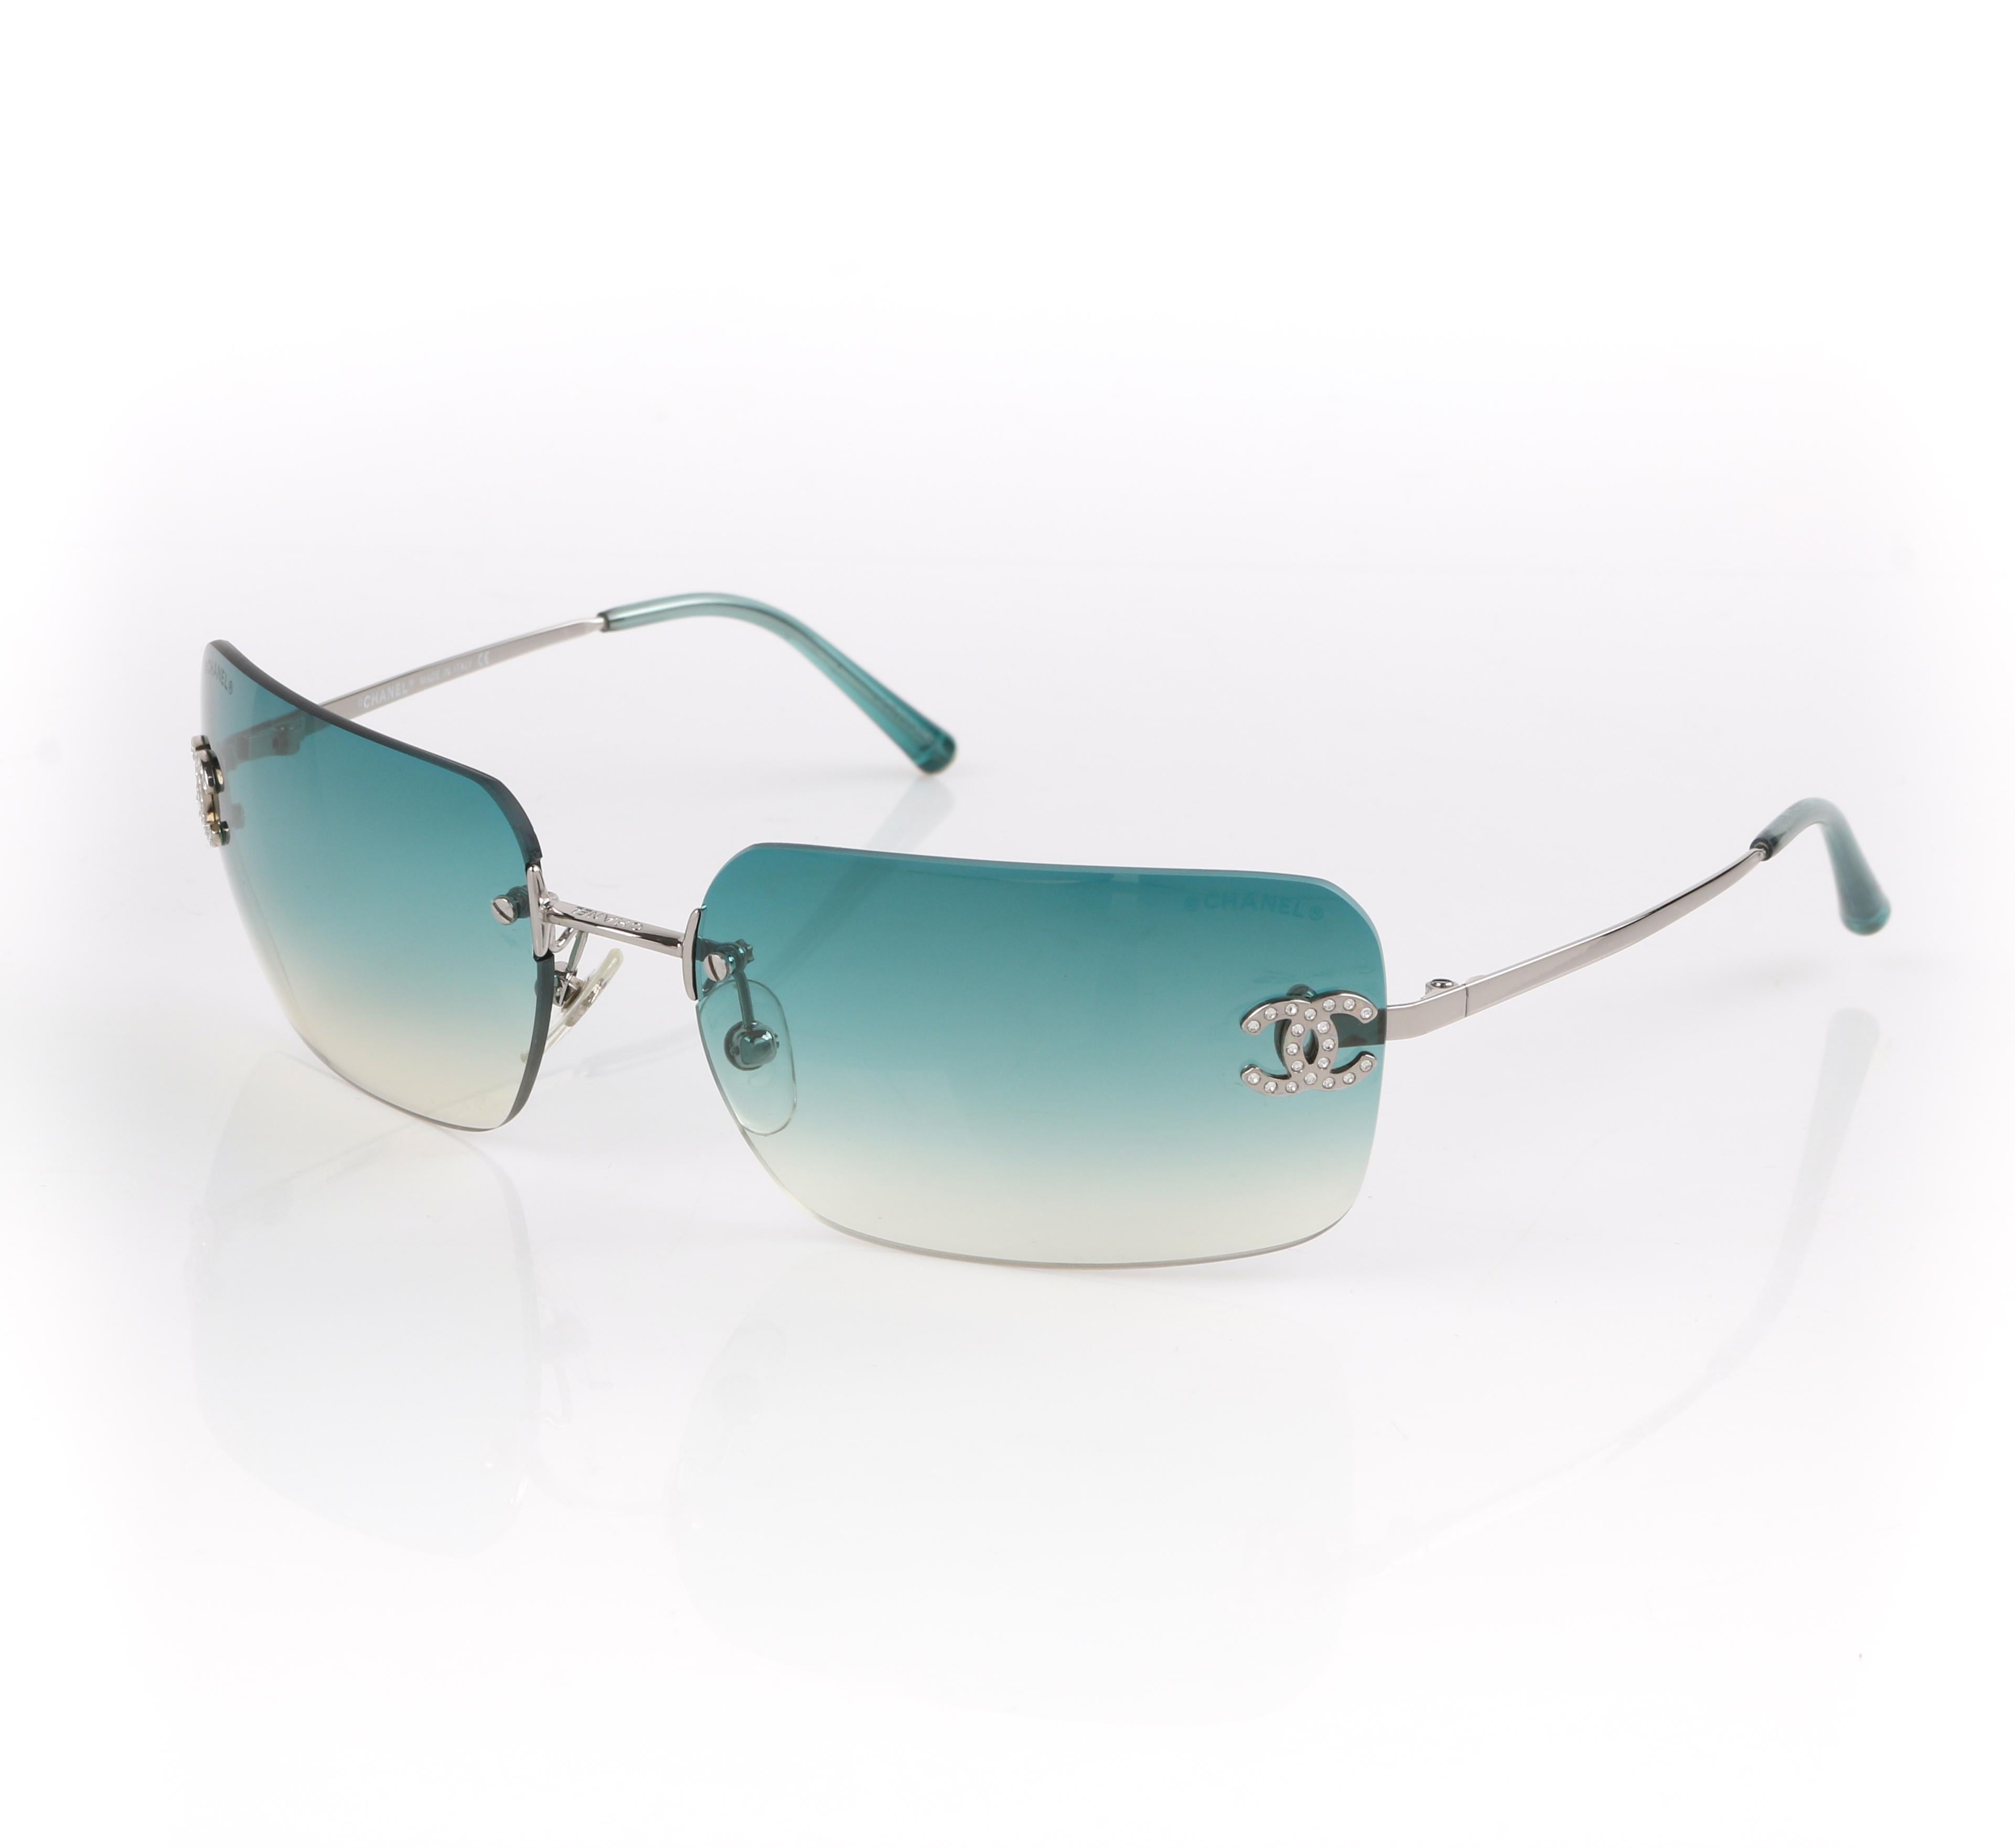 chanel 4017 sunglasses